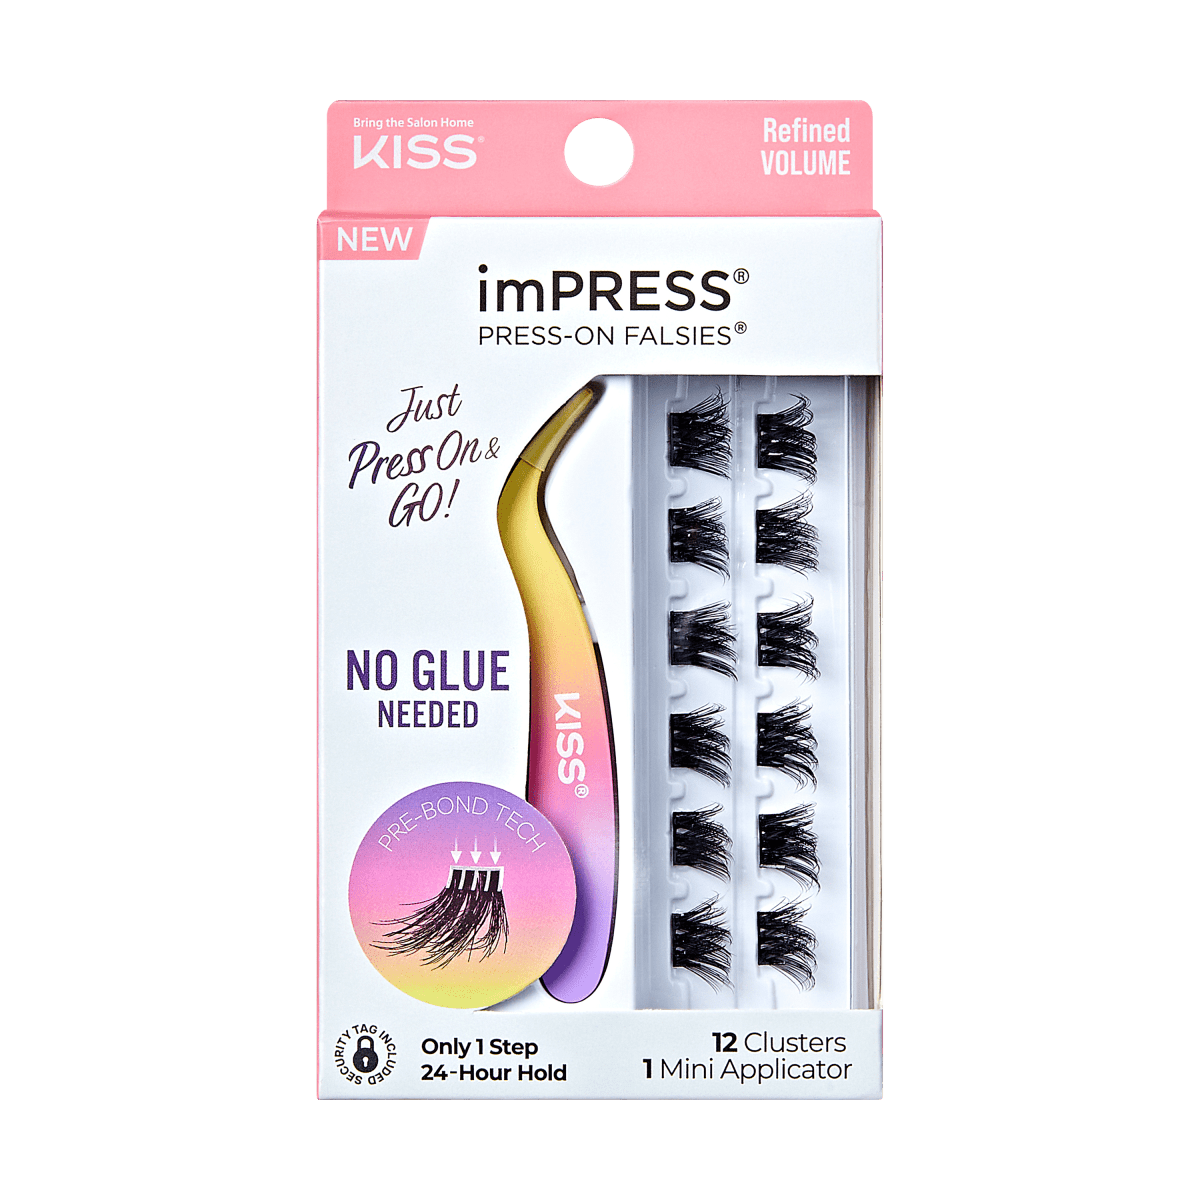 imPRESS Press-On Falsies Minipack, 12 Clusters + Applicator - Refined